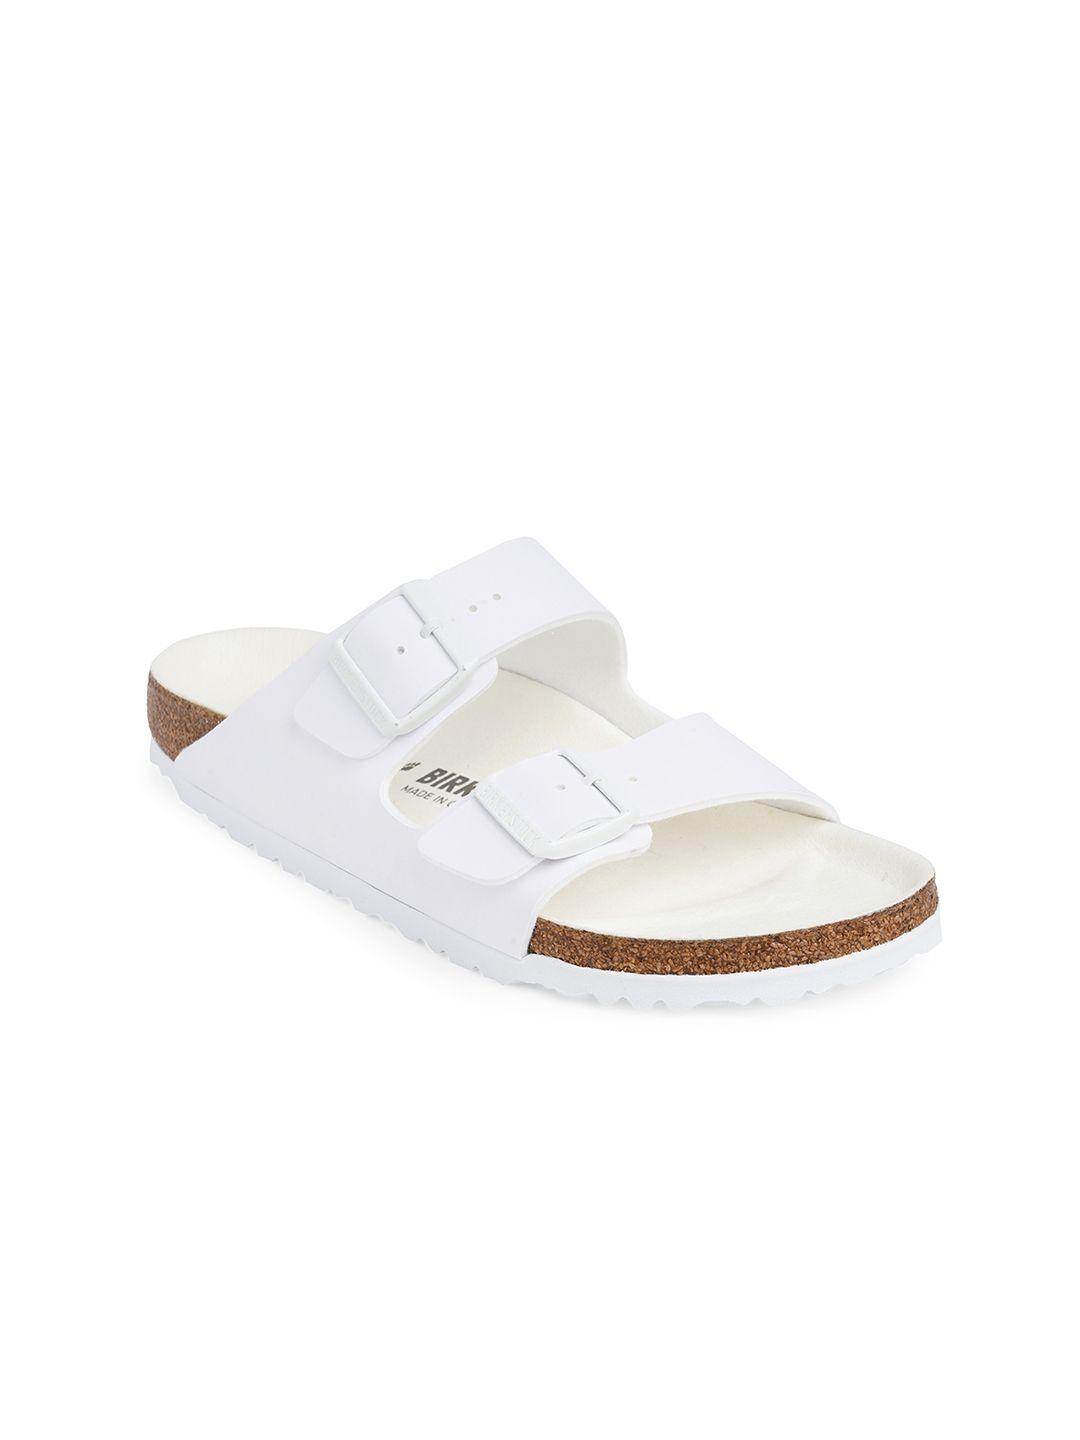 birkenstock unisex white narrow width arizona slide sandals